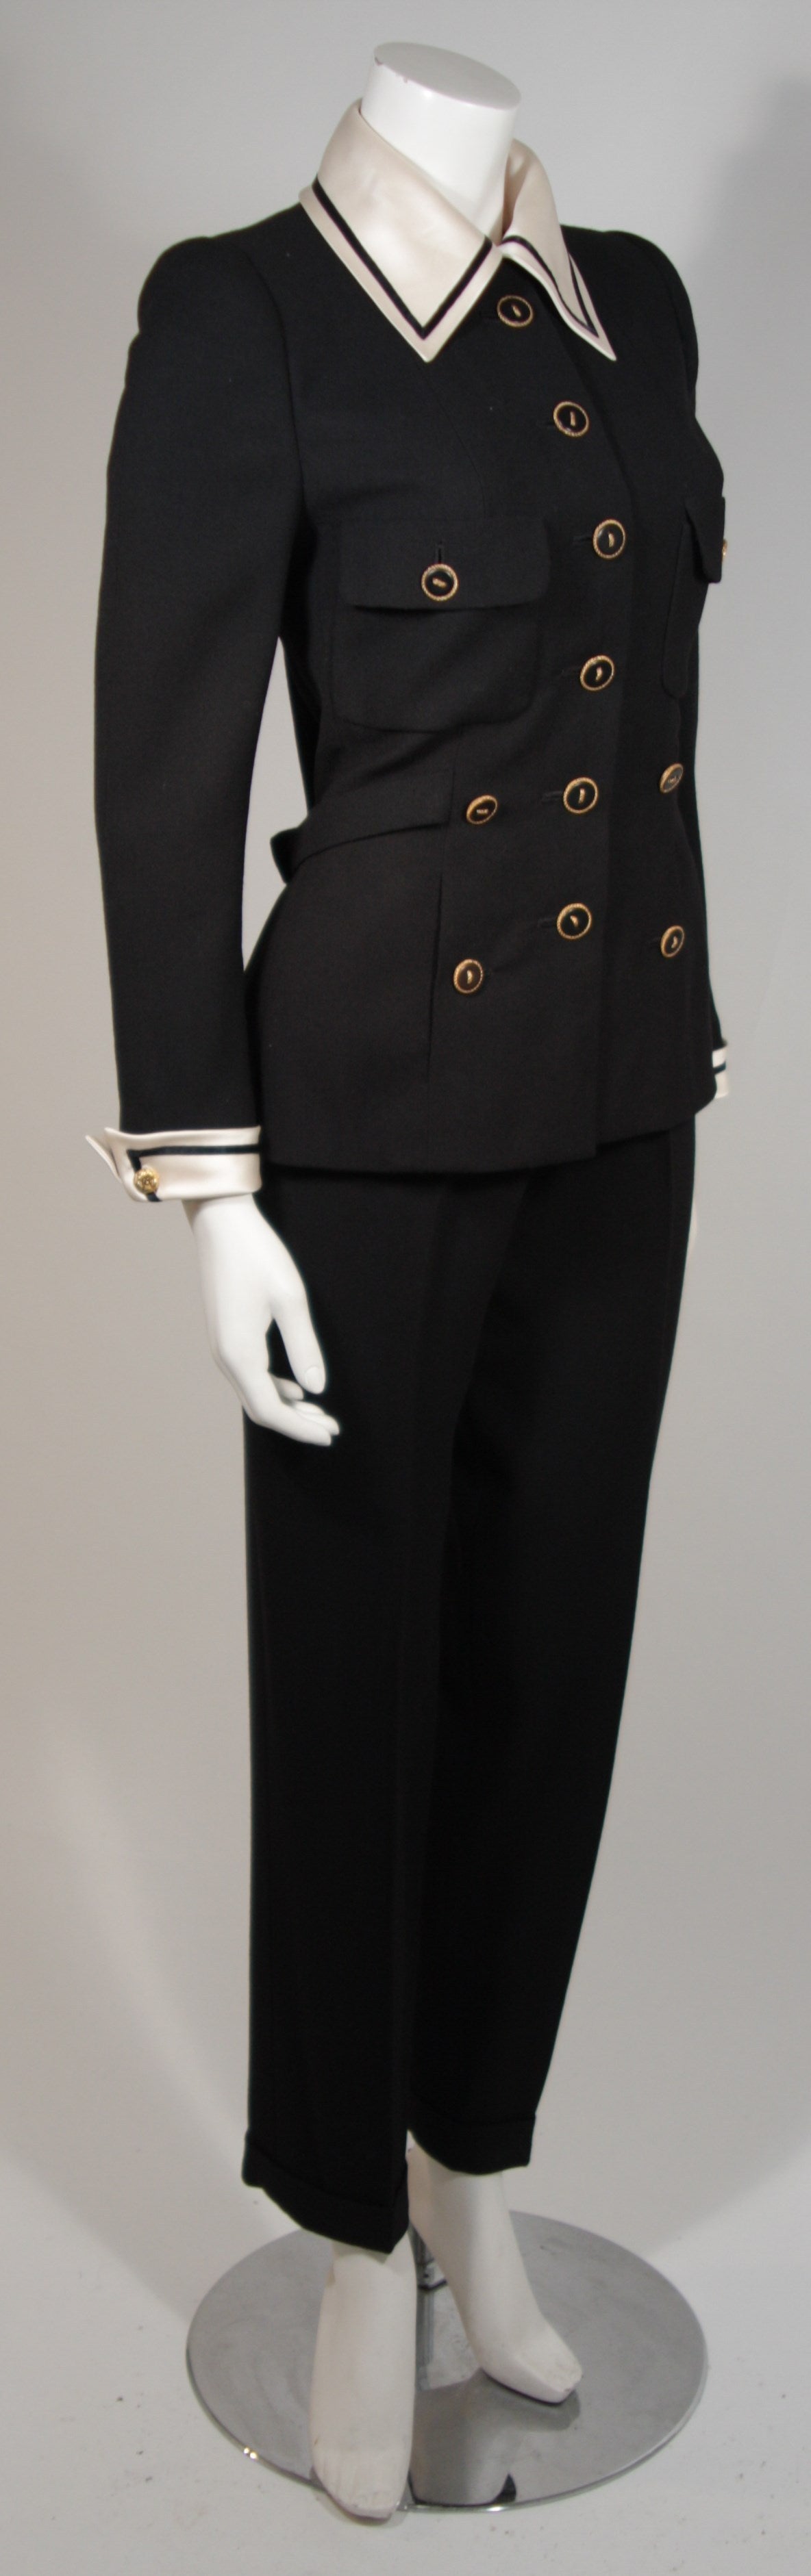 Women's Chanel Haute Couture Black Wool Sailor Inspired Suit Size 2-4 EU 34-36